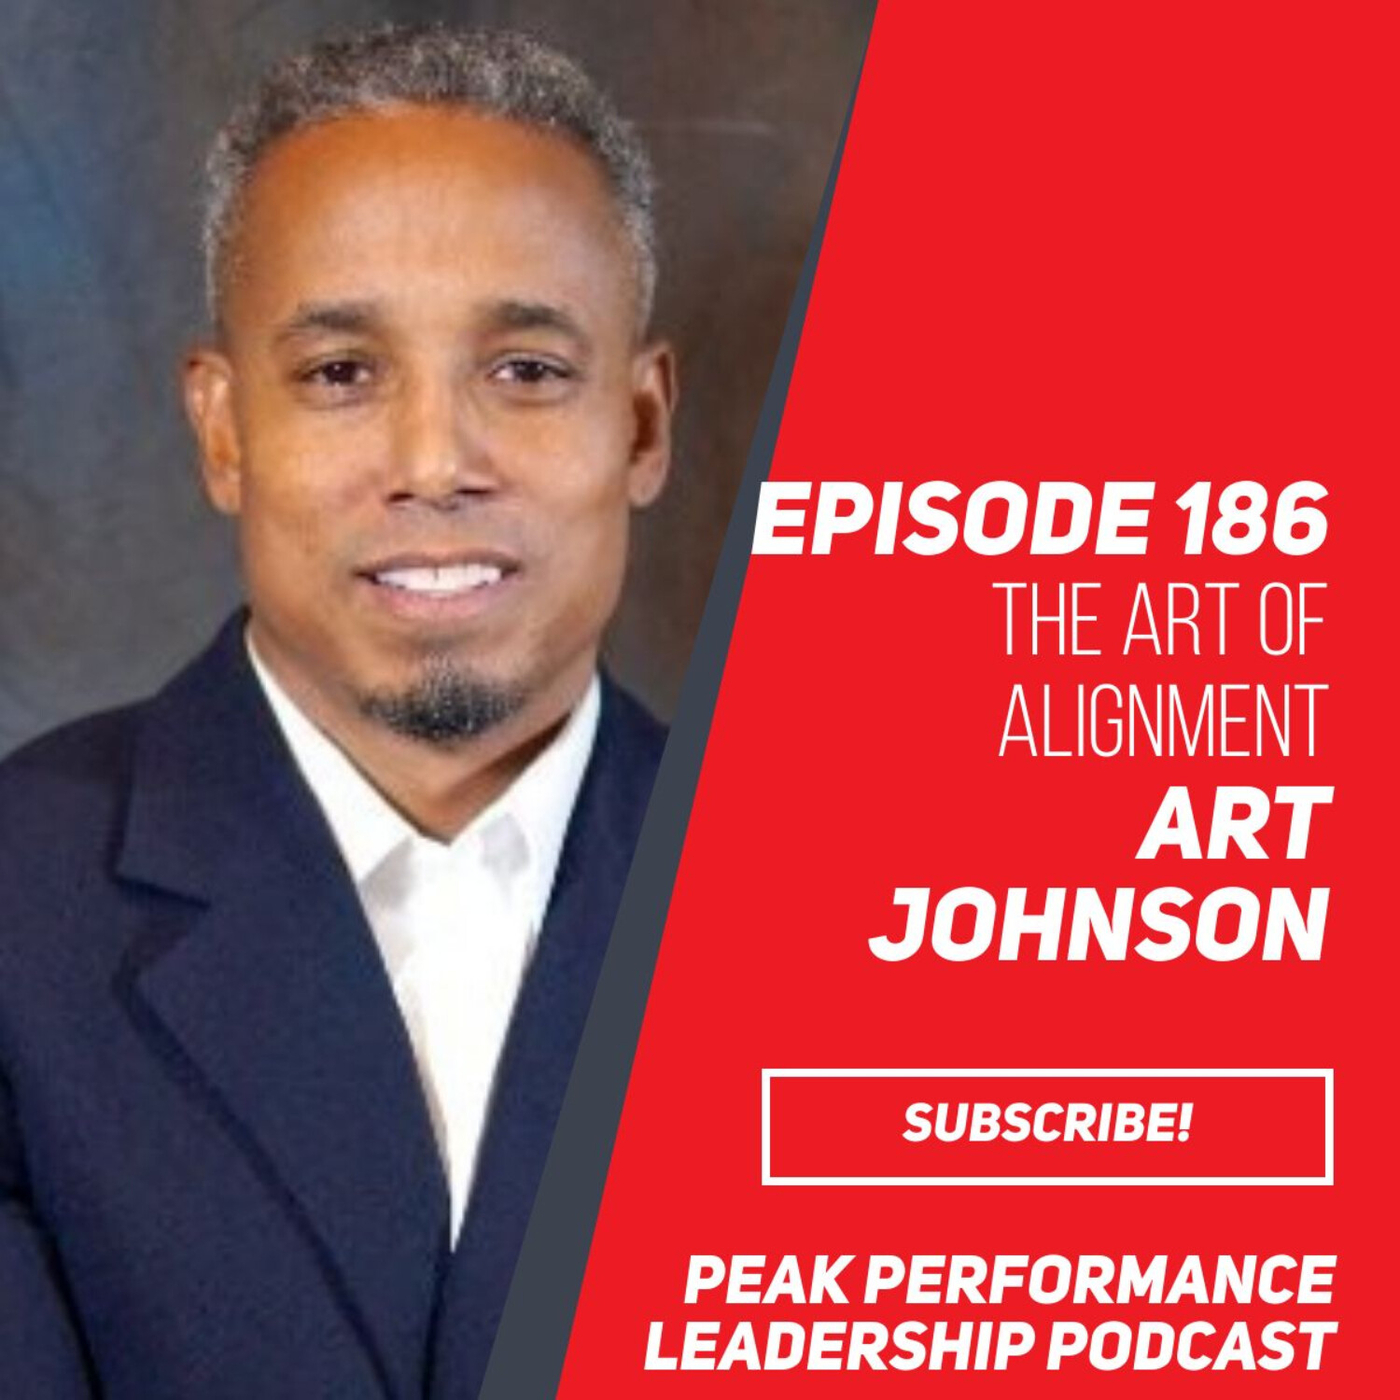 The Art of Alignment Art Johnson Peak Performance Leadership